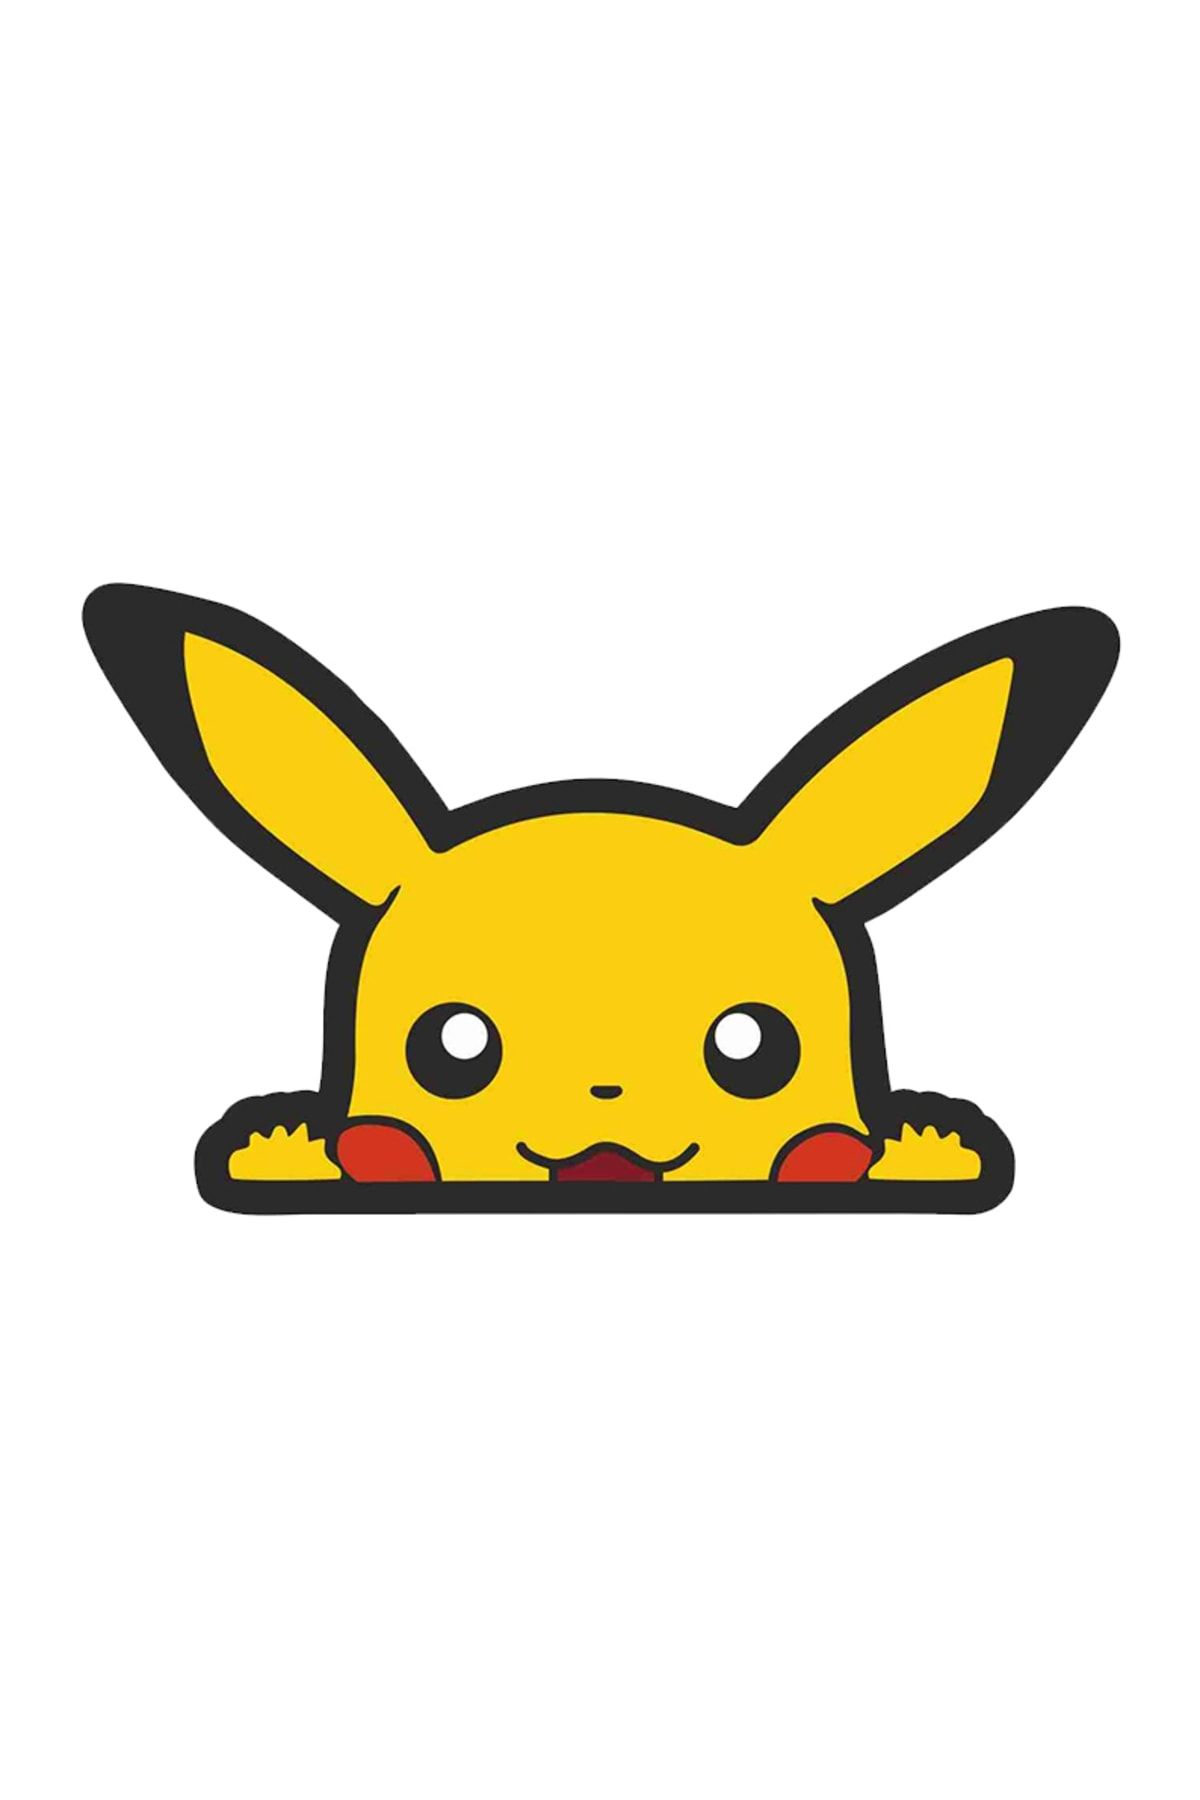 MegaSticker Pikachu Motorsiklet, Laptop, Kask, Araba Sticker 14x9 Cm